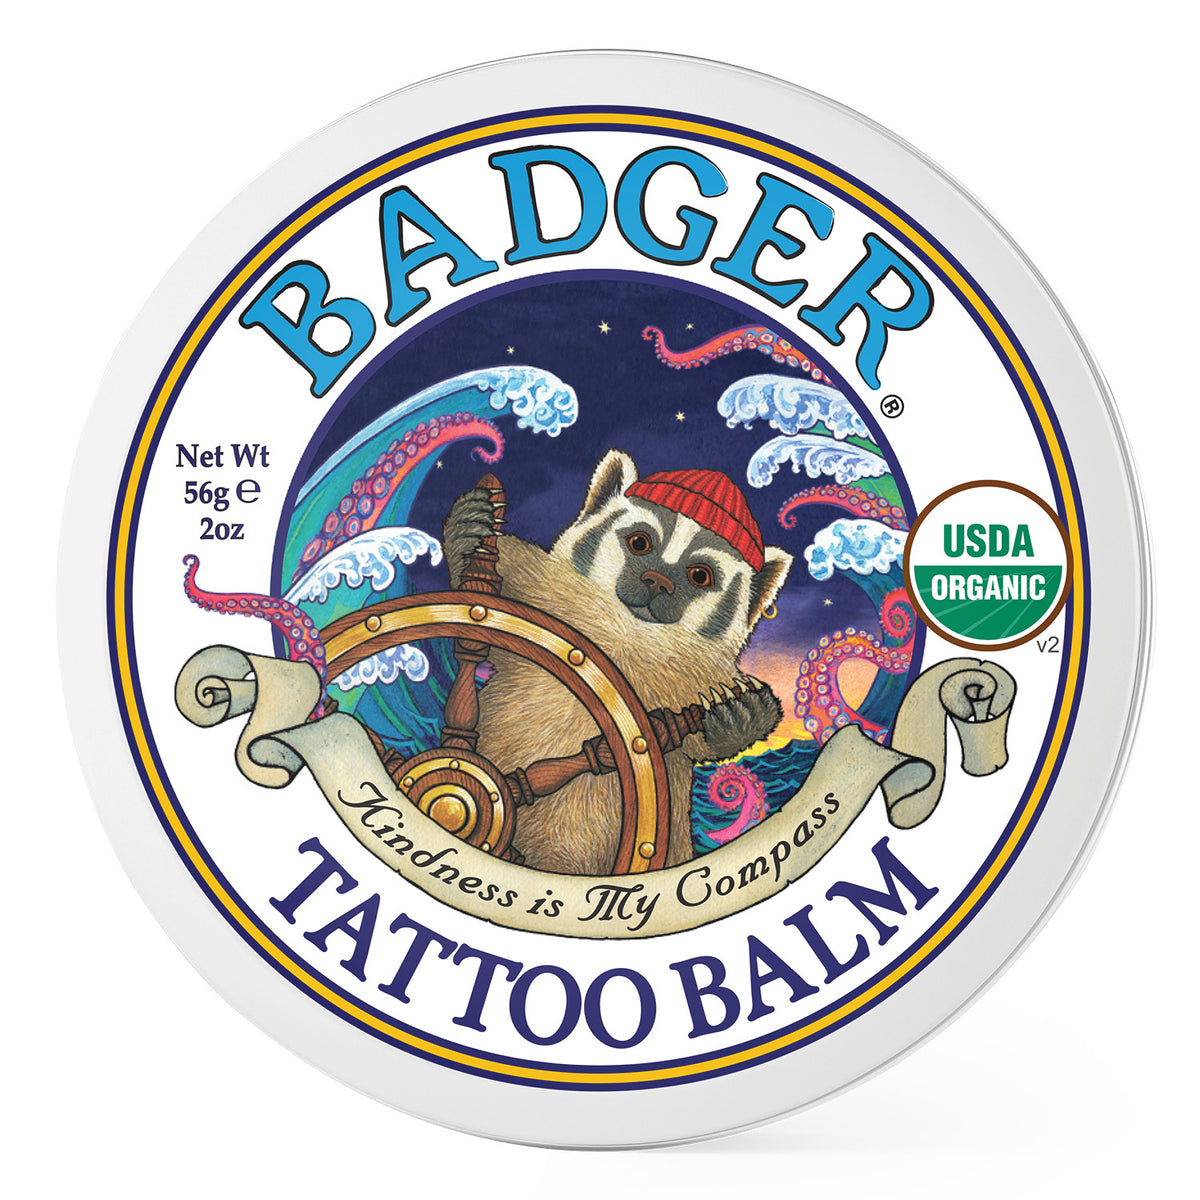 Badger balm tattoo